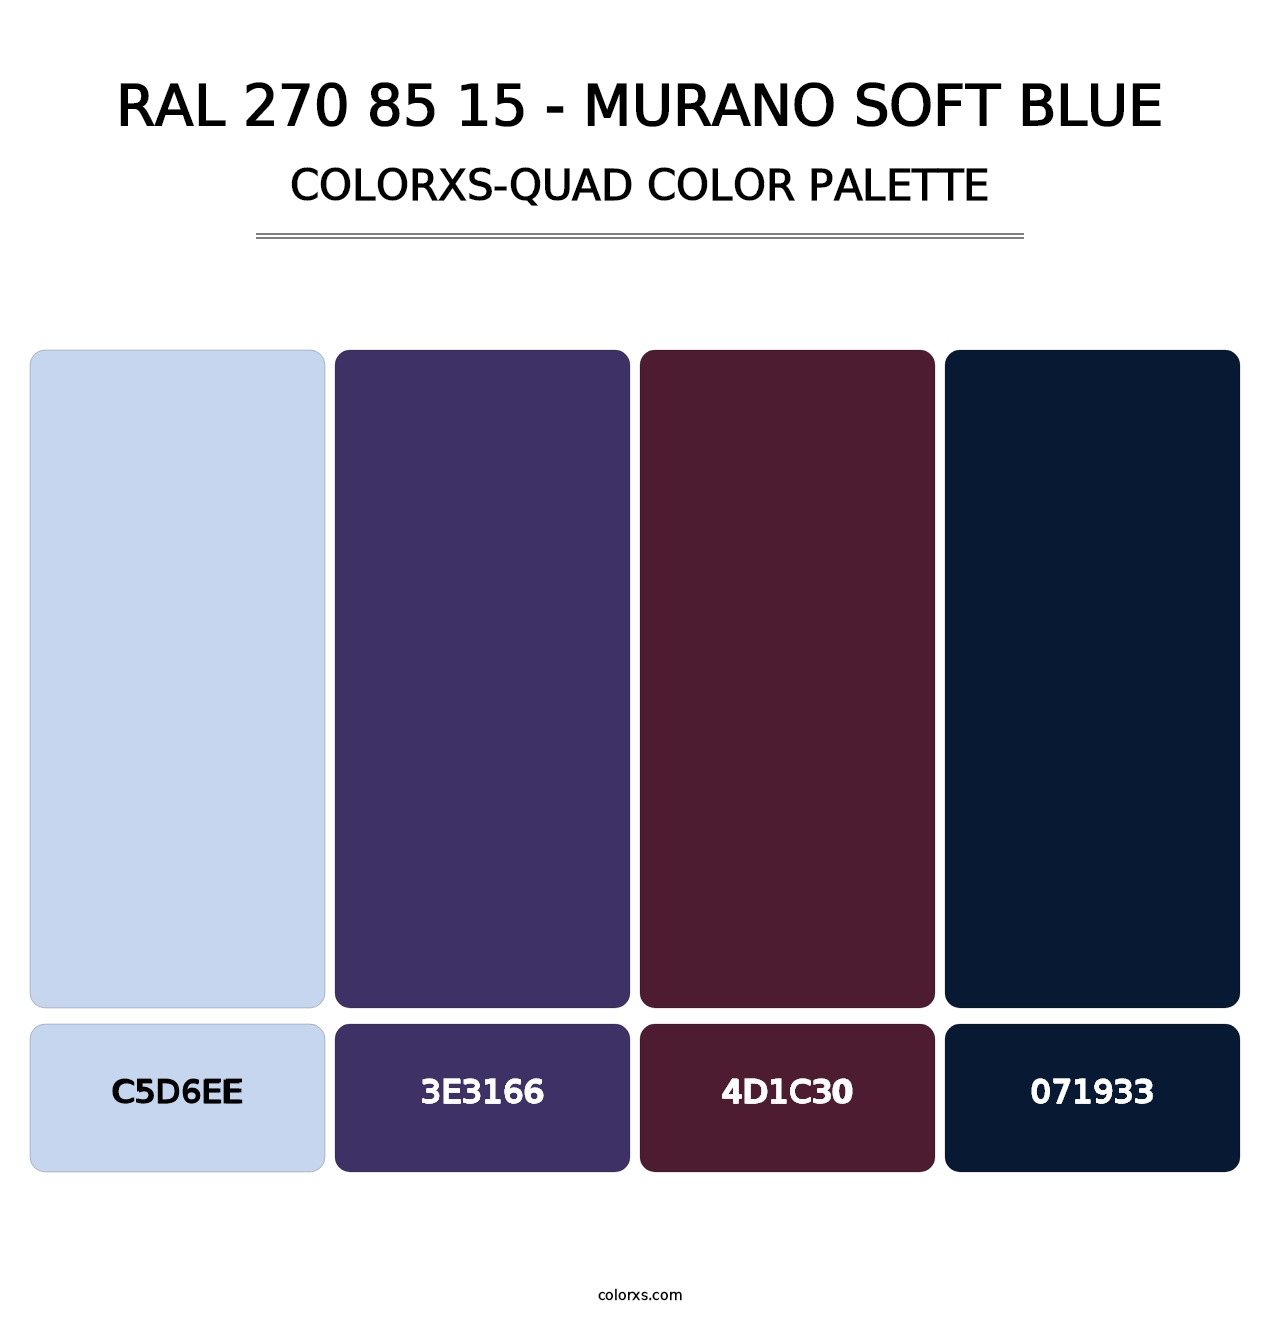 RAL 270 85 15 - Murano Soft Blue - Colorxs Quad Palette